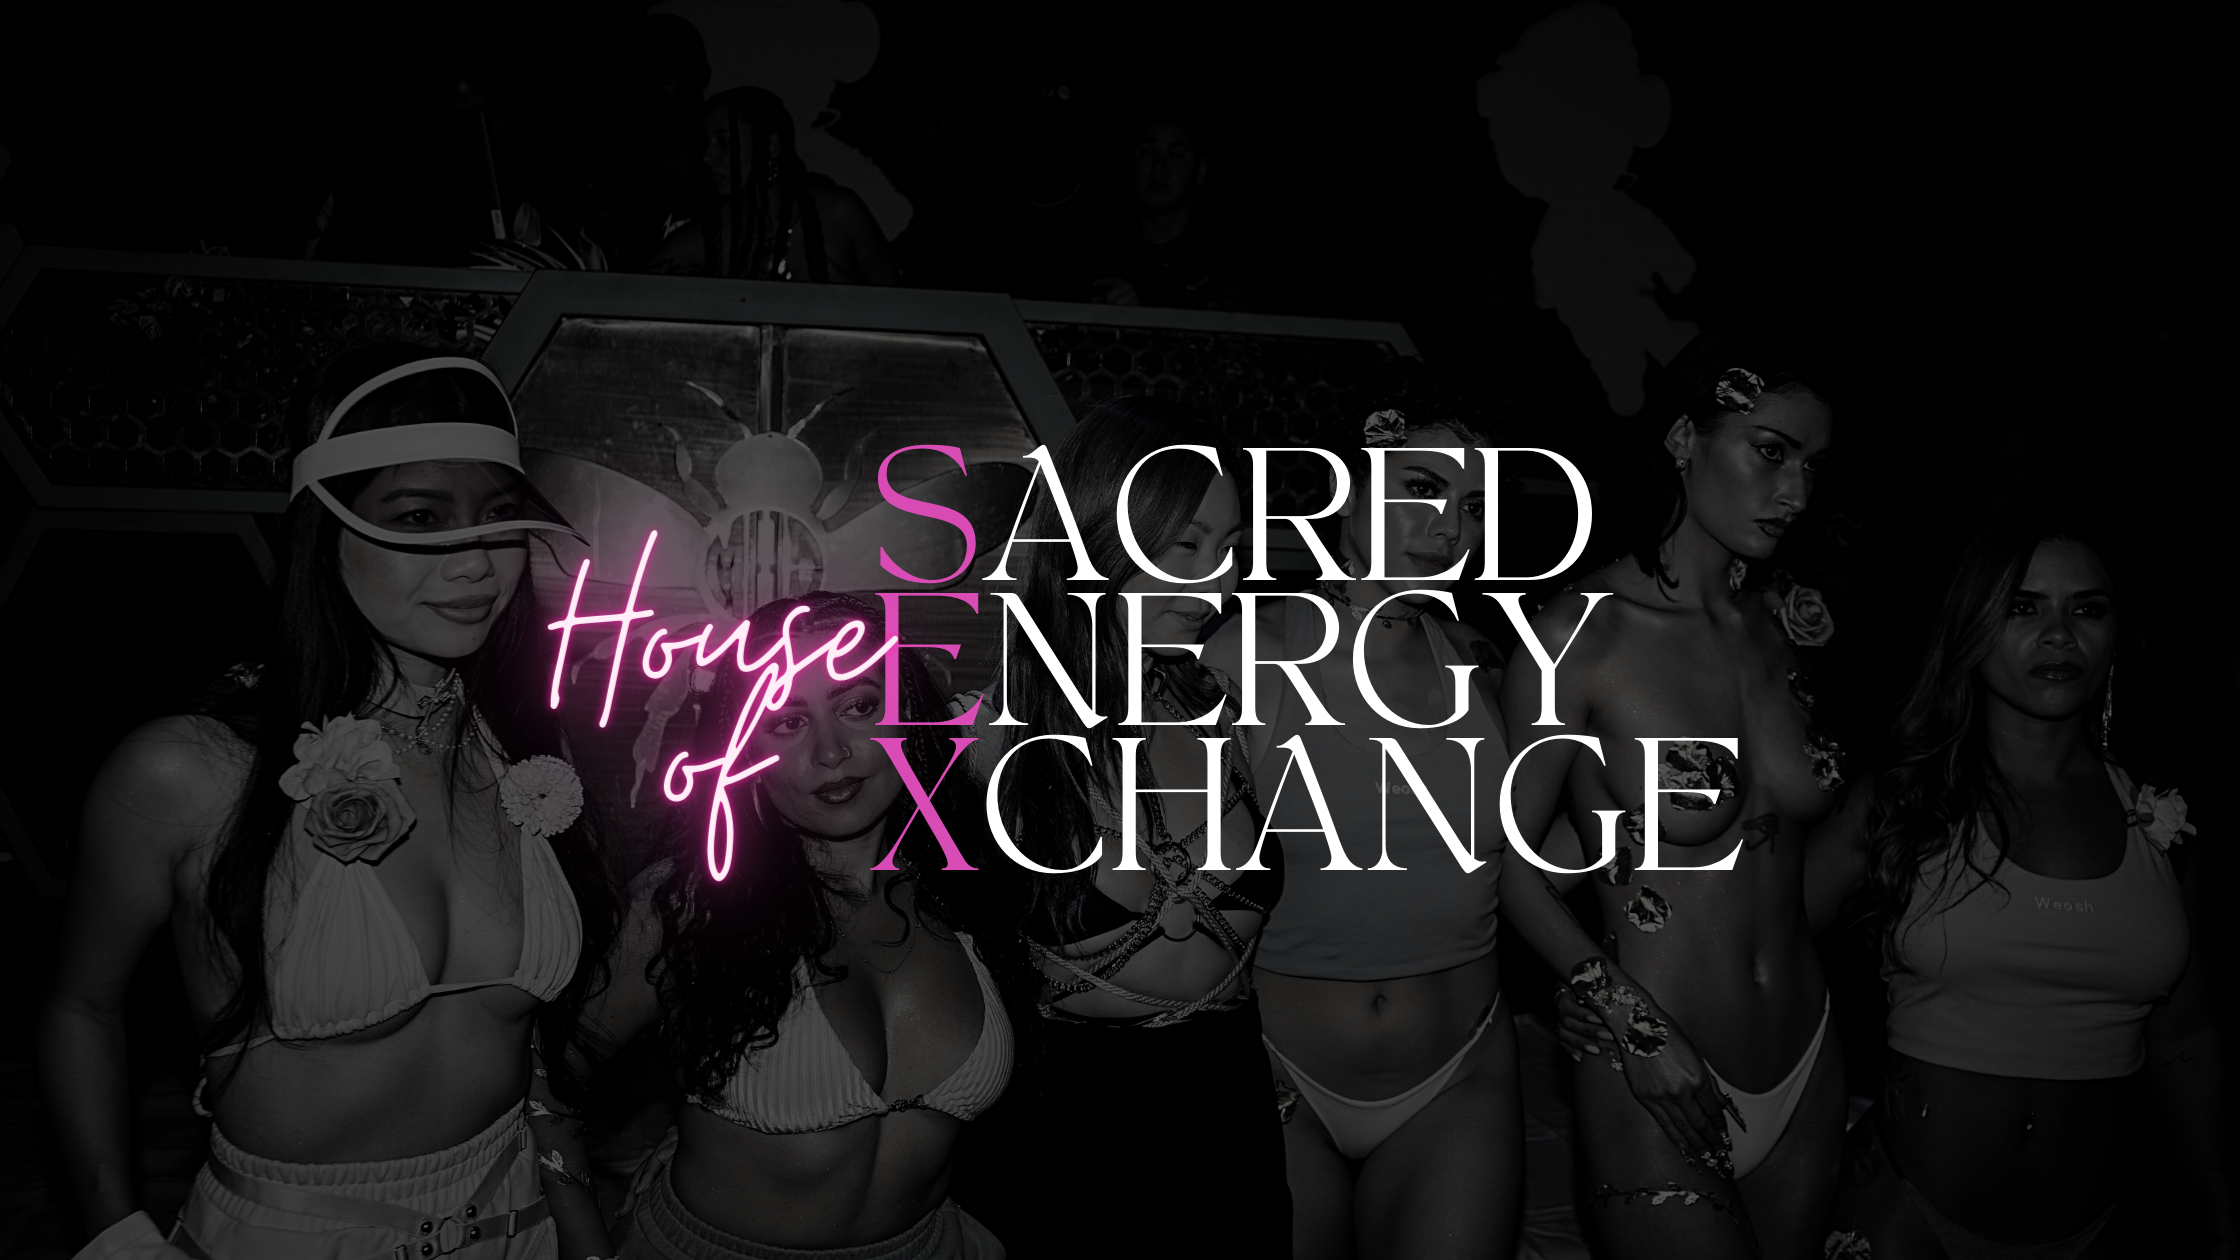 House of Sacred Energy Xchange Cover Image